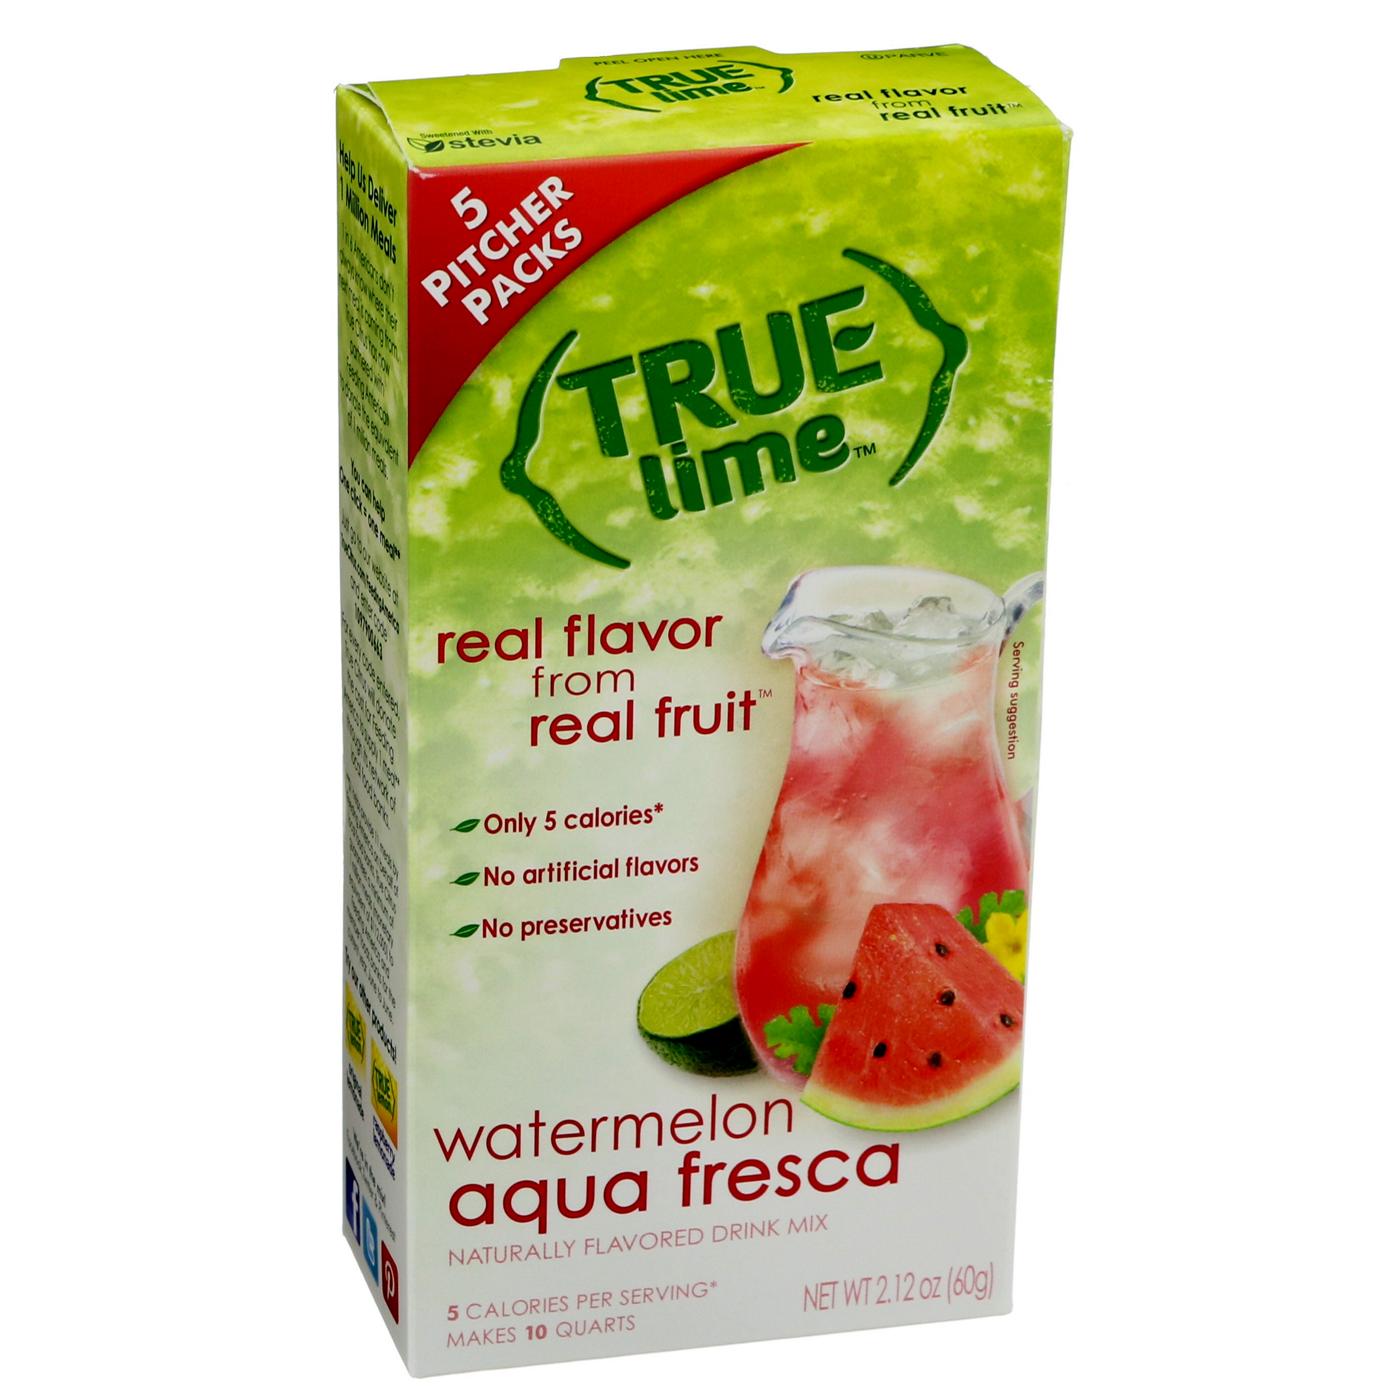 True Lime Watermelon Agua Fresca; image 1 of 3